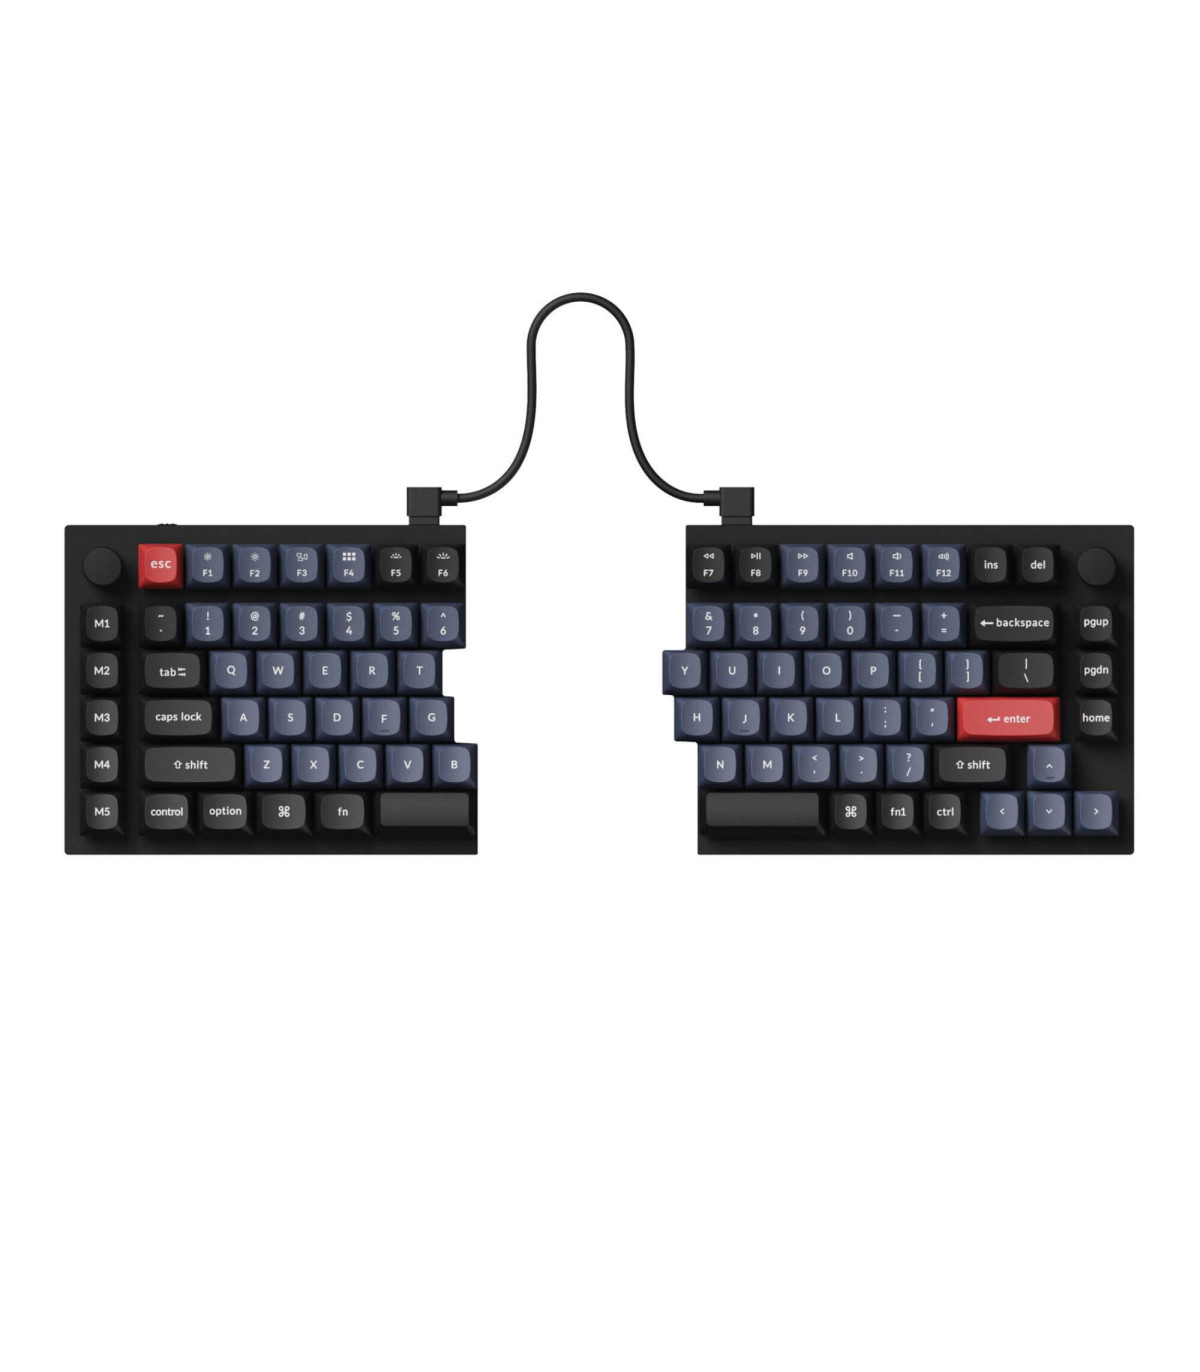 Keychron Q11 Keyboard: Best-in-class ergonomic typing experience